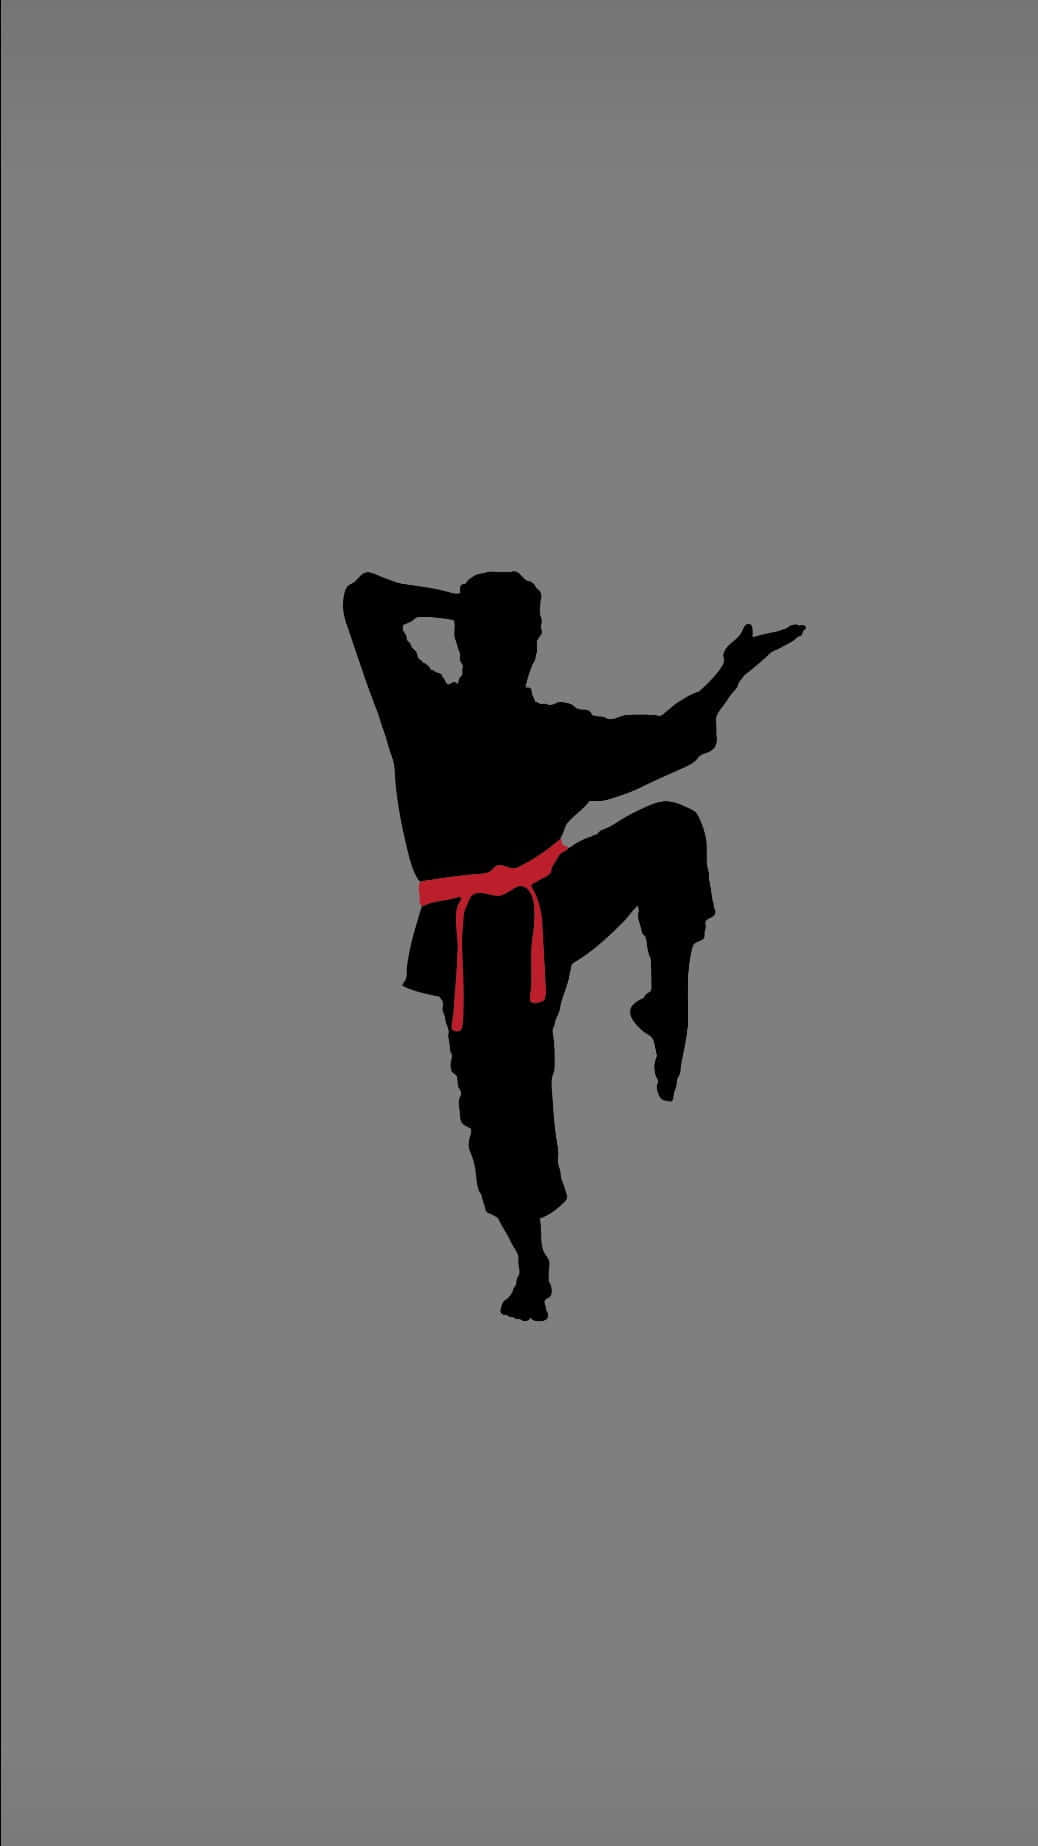 martial arts kick silhouette